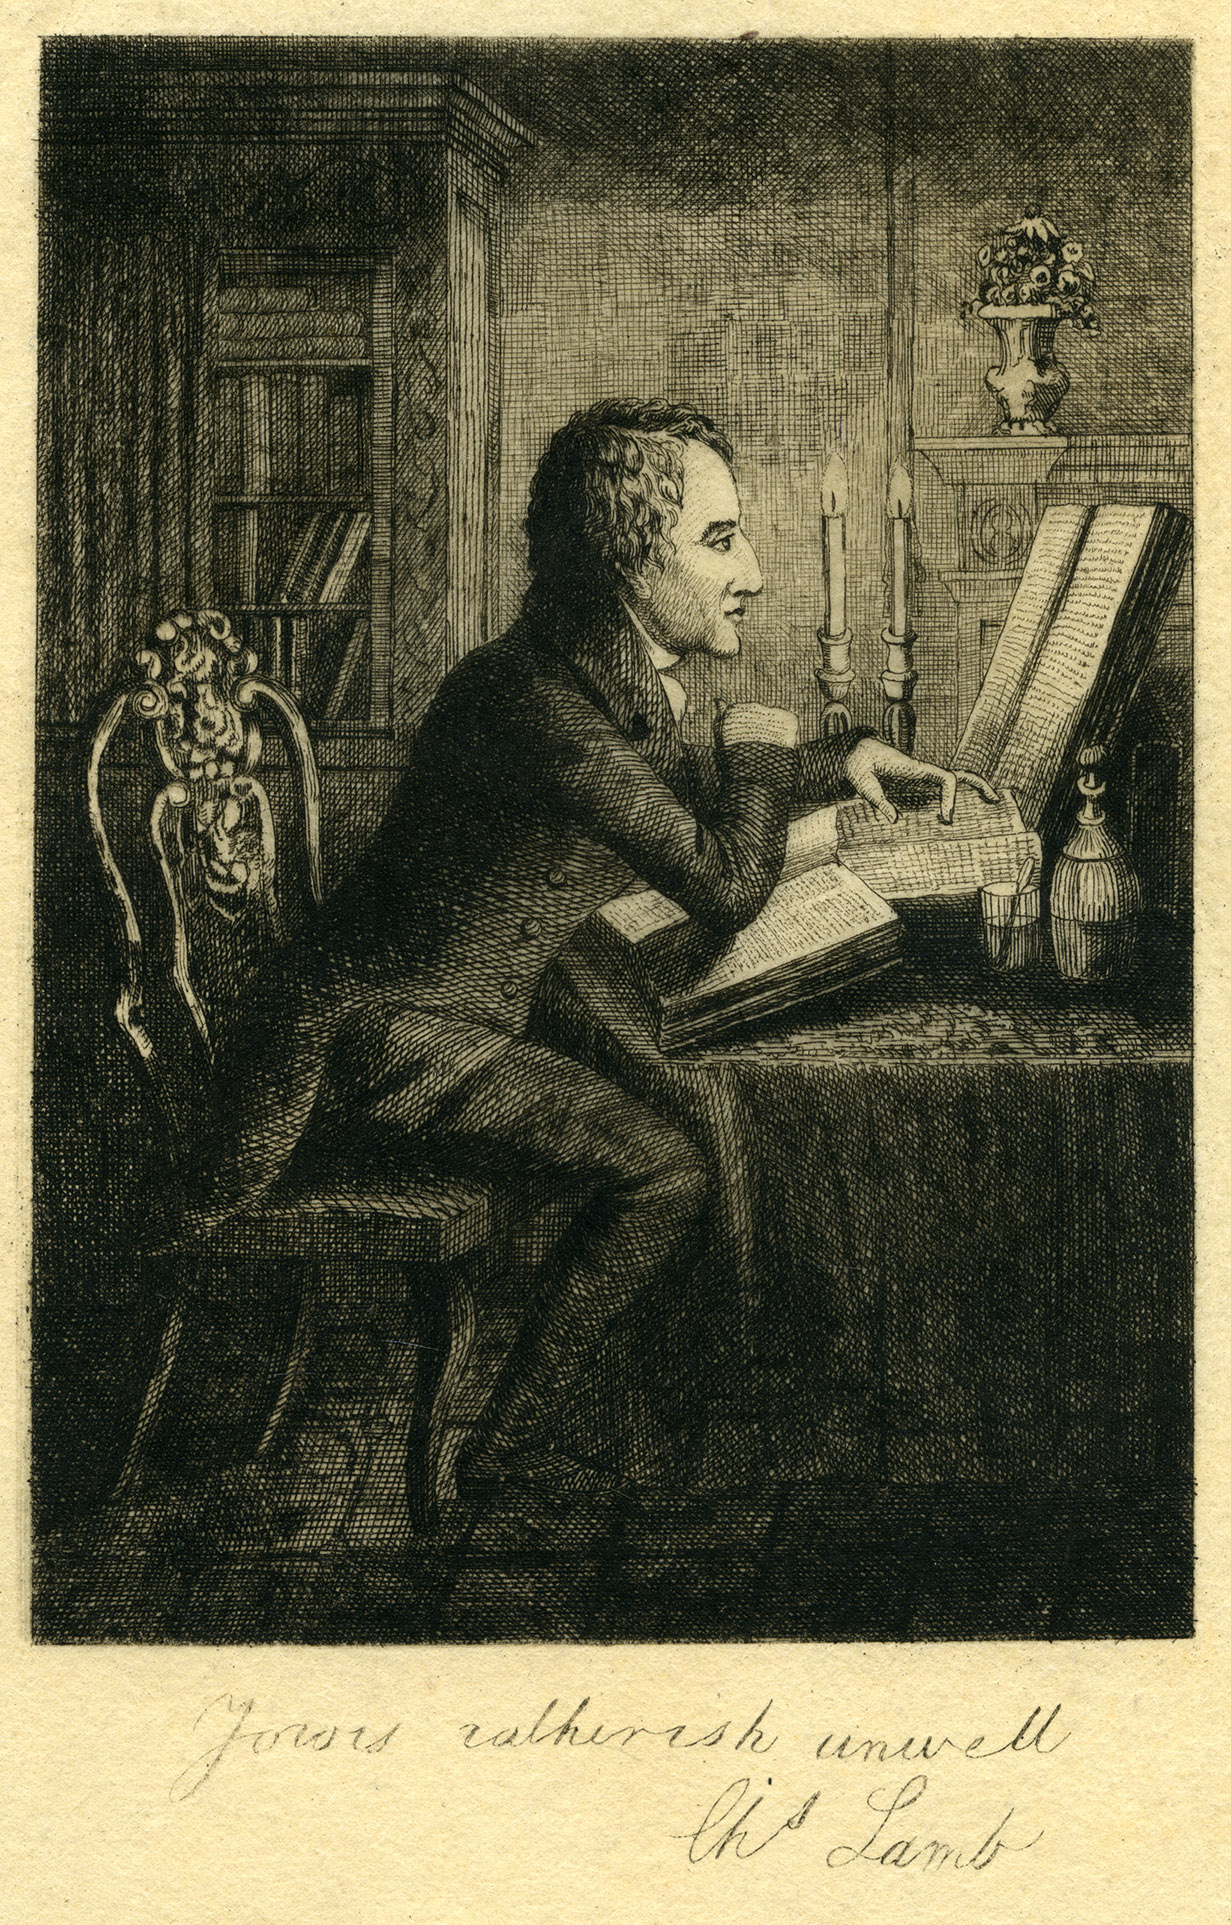 
An image of: Charles Lamb, print after 